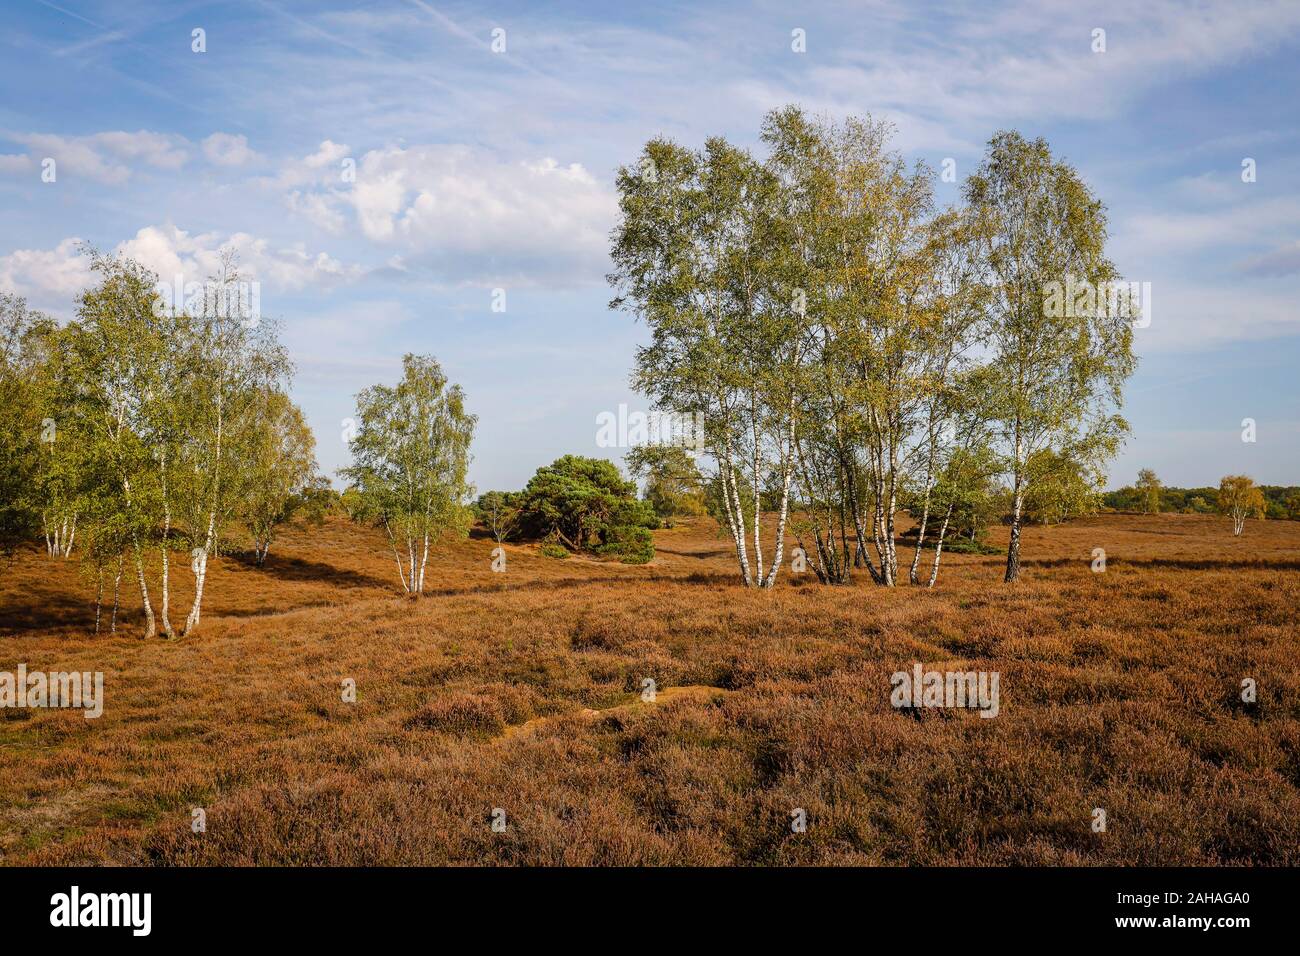 14.10.2019, Haltern am See, North Rhine-Westphalia, Germany - Westruper Heide, the largest dwarf shrub heath area in Westphalia. 00X191014D018CAROEX.J Stock Photo